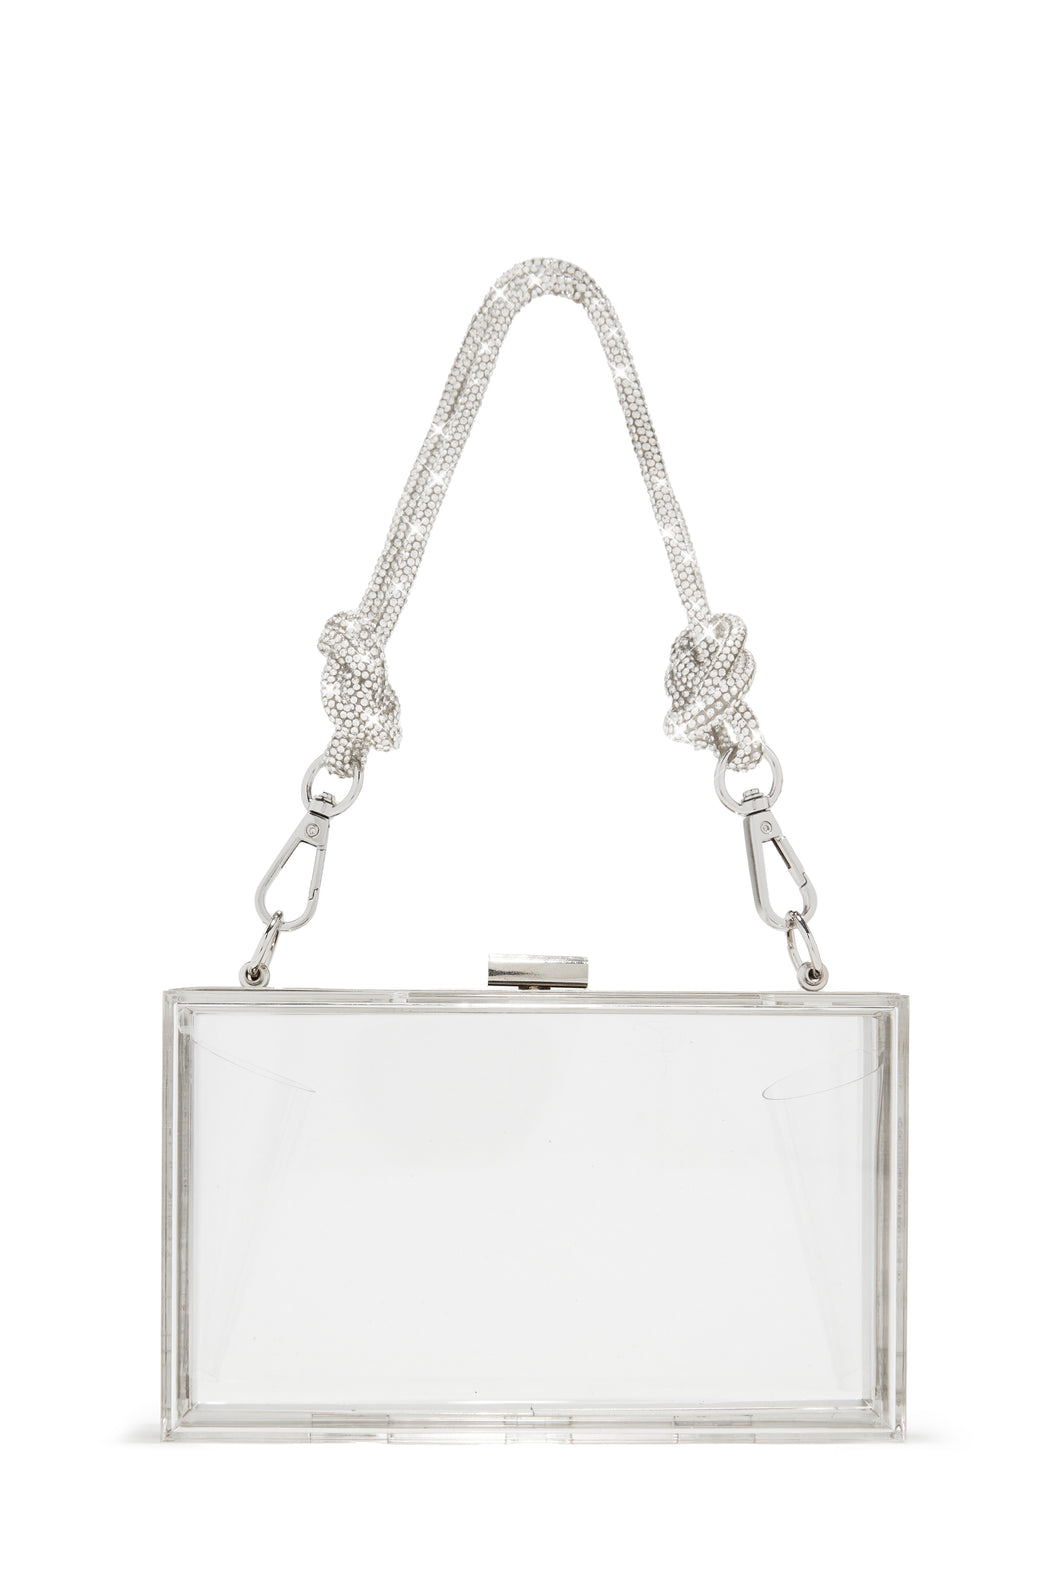 Cheap Women Cute Clear Purse Acrylic Box Clutch Handbag, Transparent  Crossbody Evening Bag Stadium Approved Chain Strap | Joom